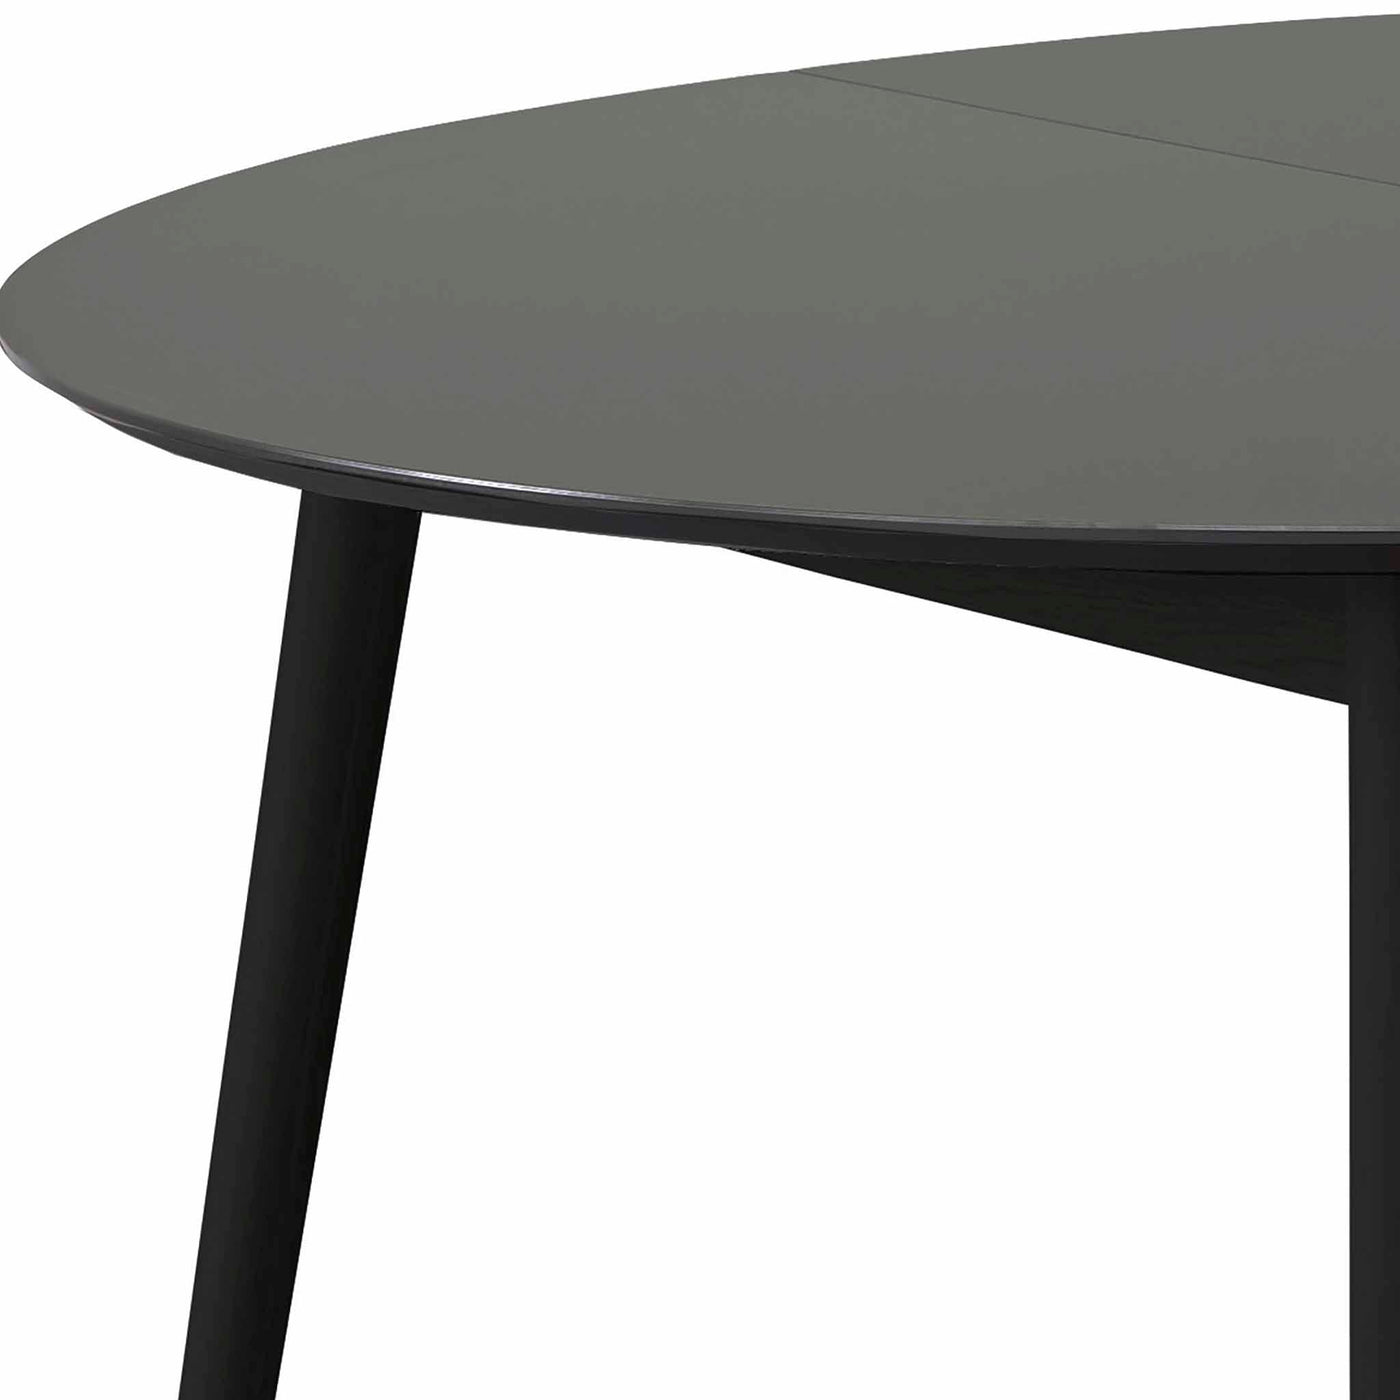 Meza by Hammel Round spisebord med bordplade i grafit nano laminat og ben i sortbejdset ask.